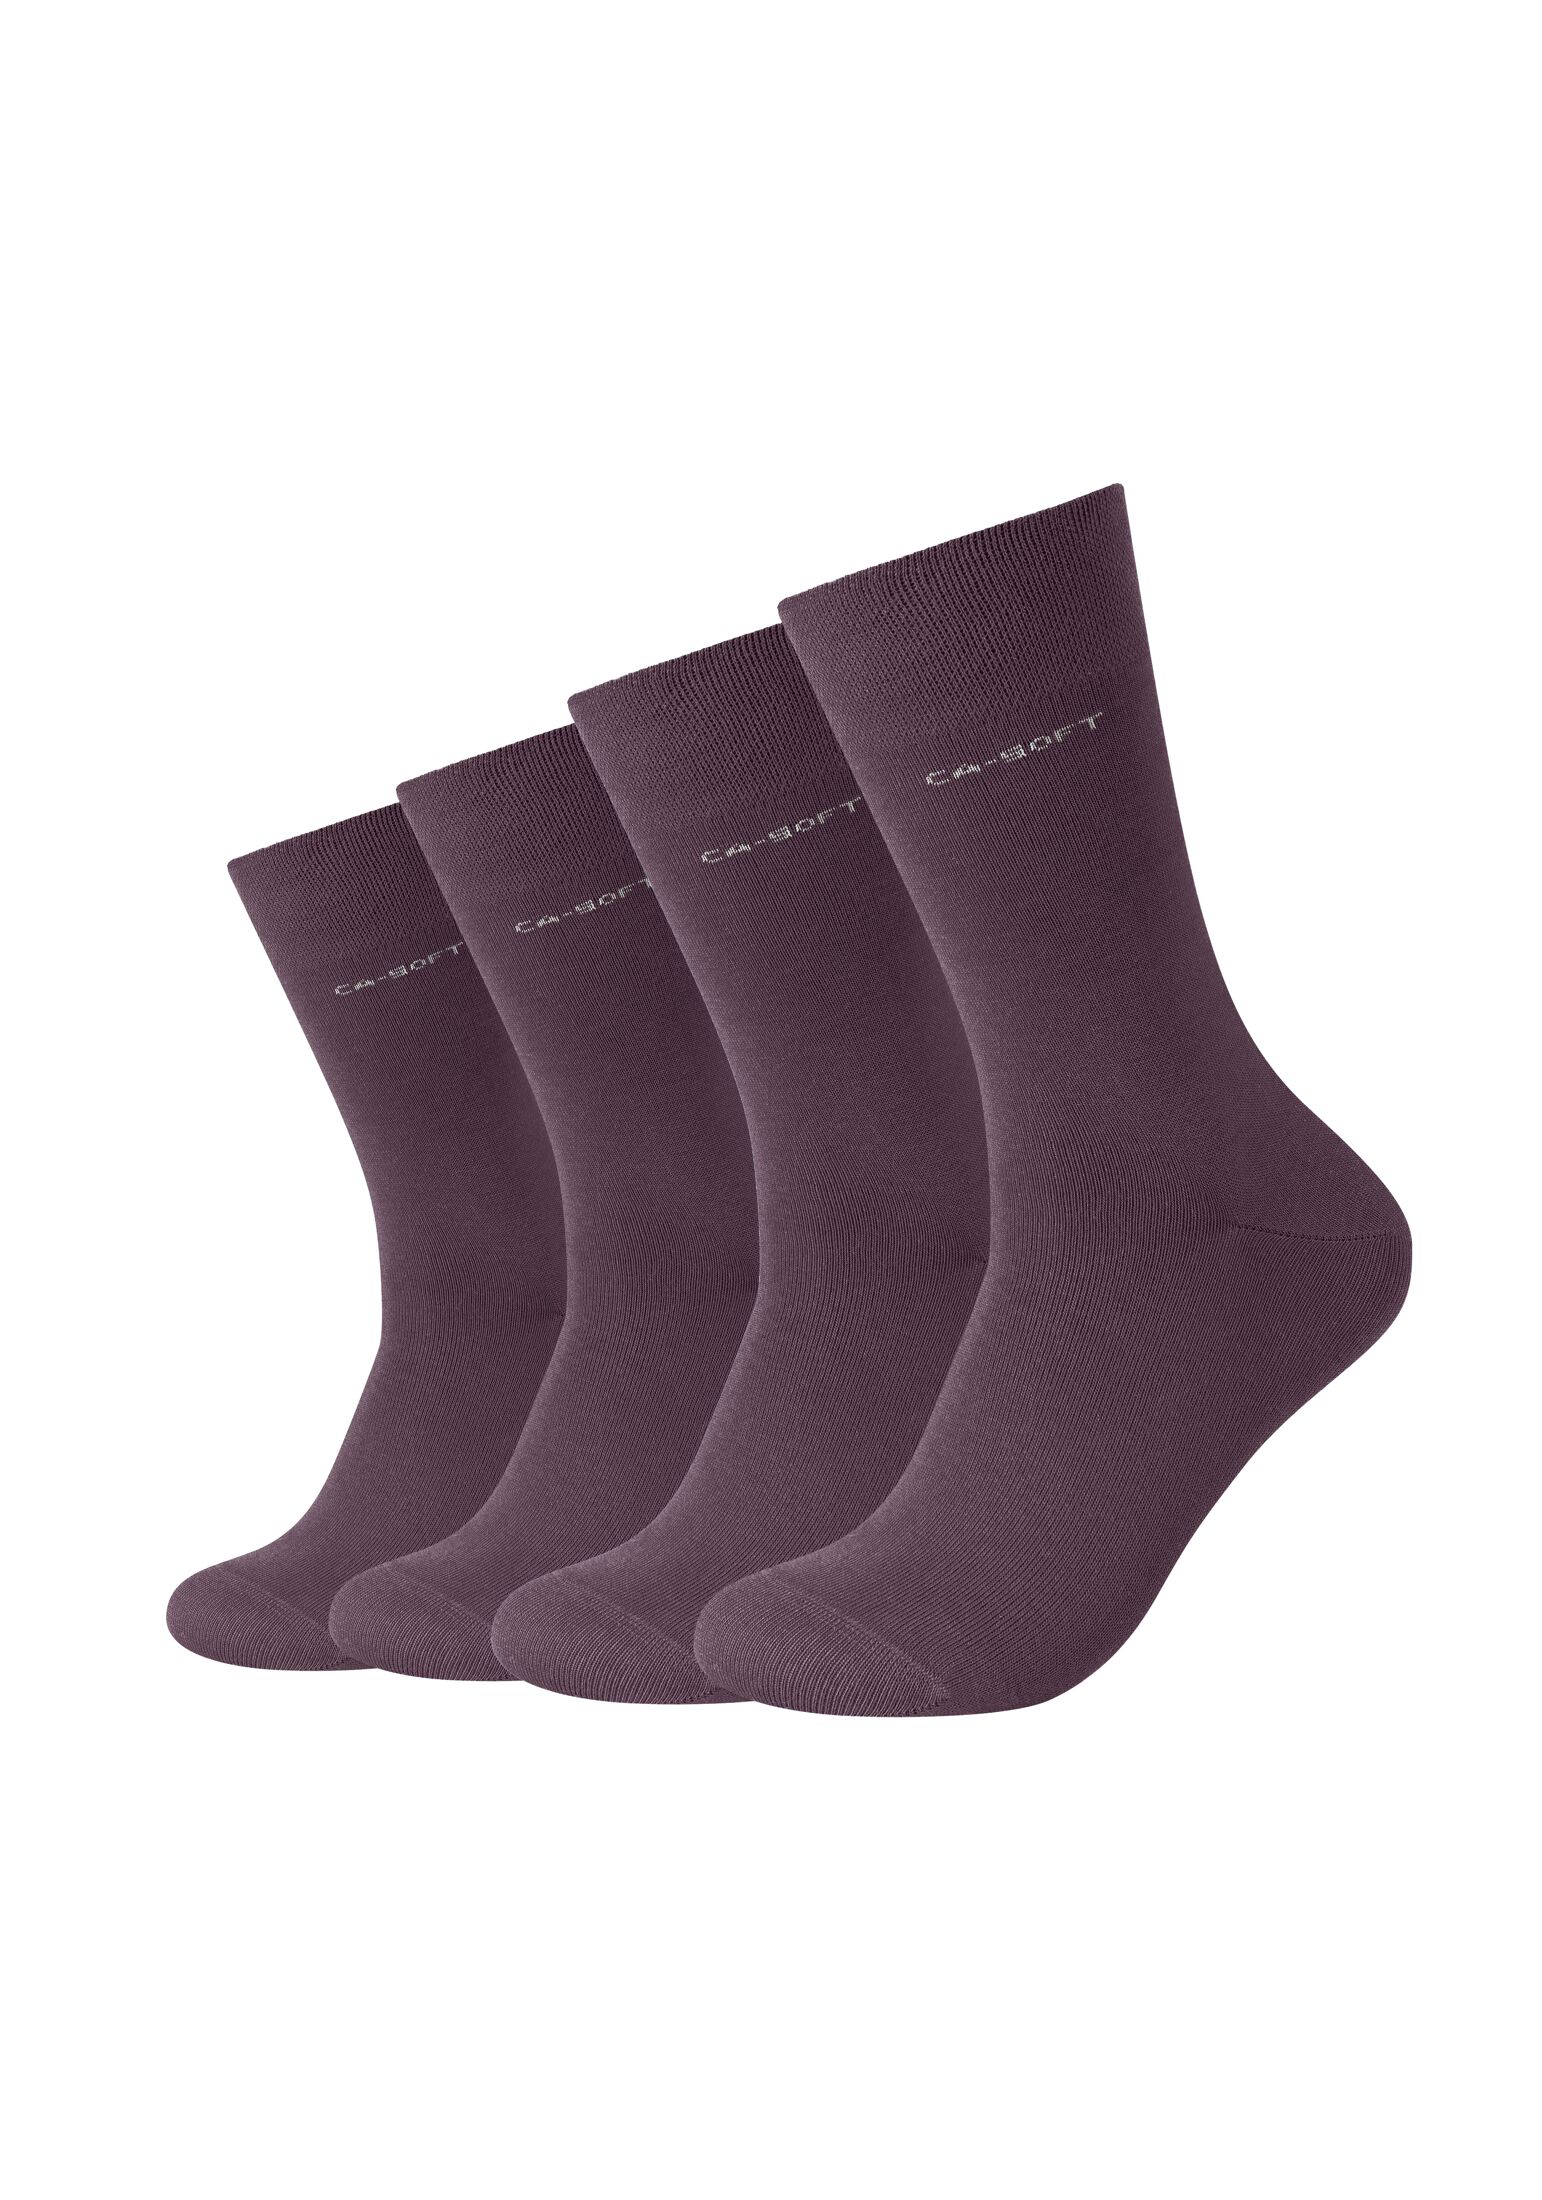 Носки camano verstärktem Fersen und Zehenbereich 4 шт ca soft, цвет potent purple цена и фото